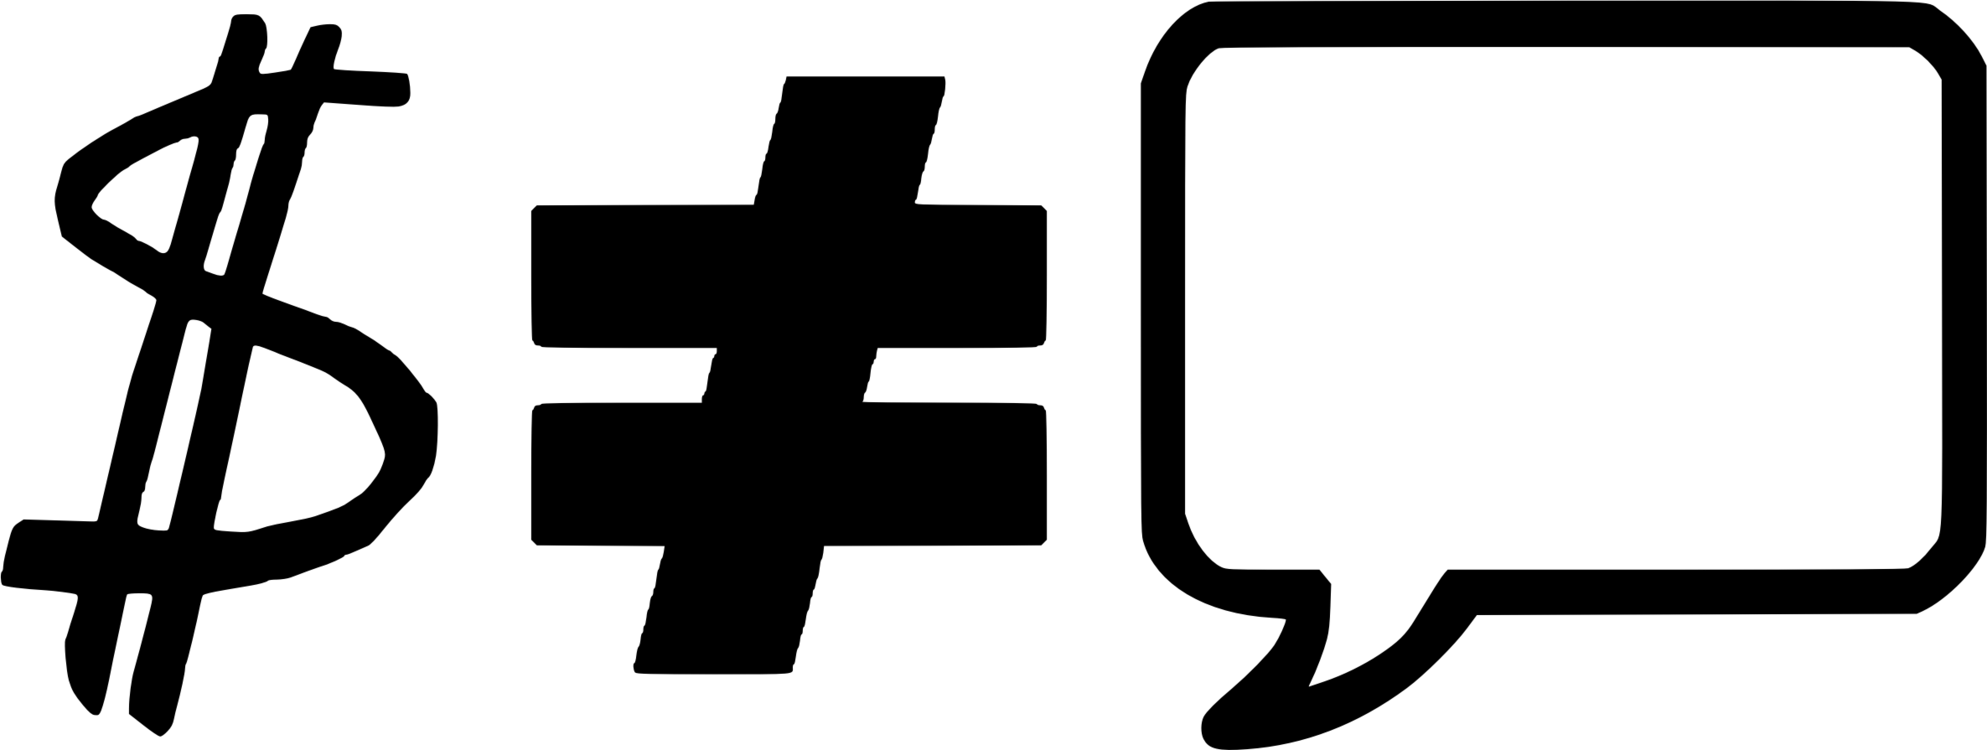 Logo,Text,Symbol